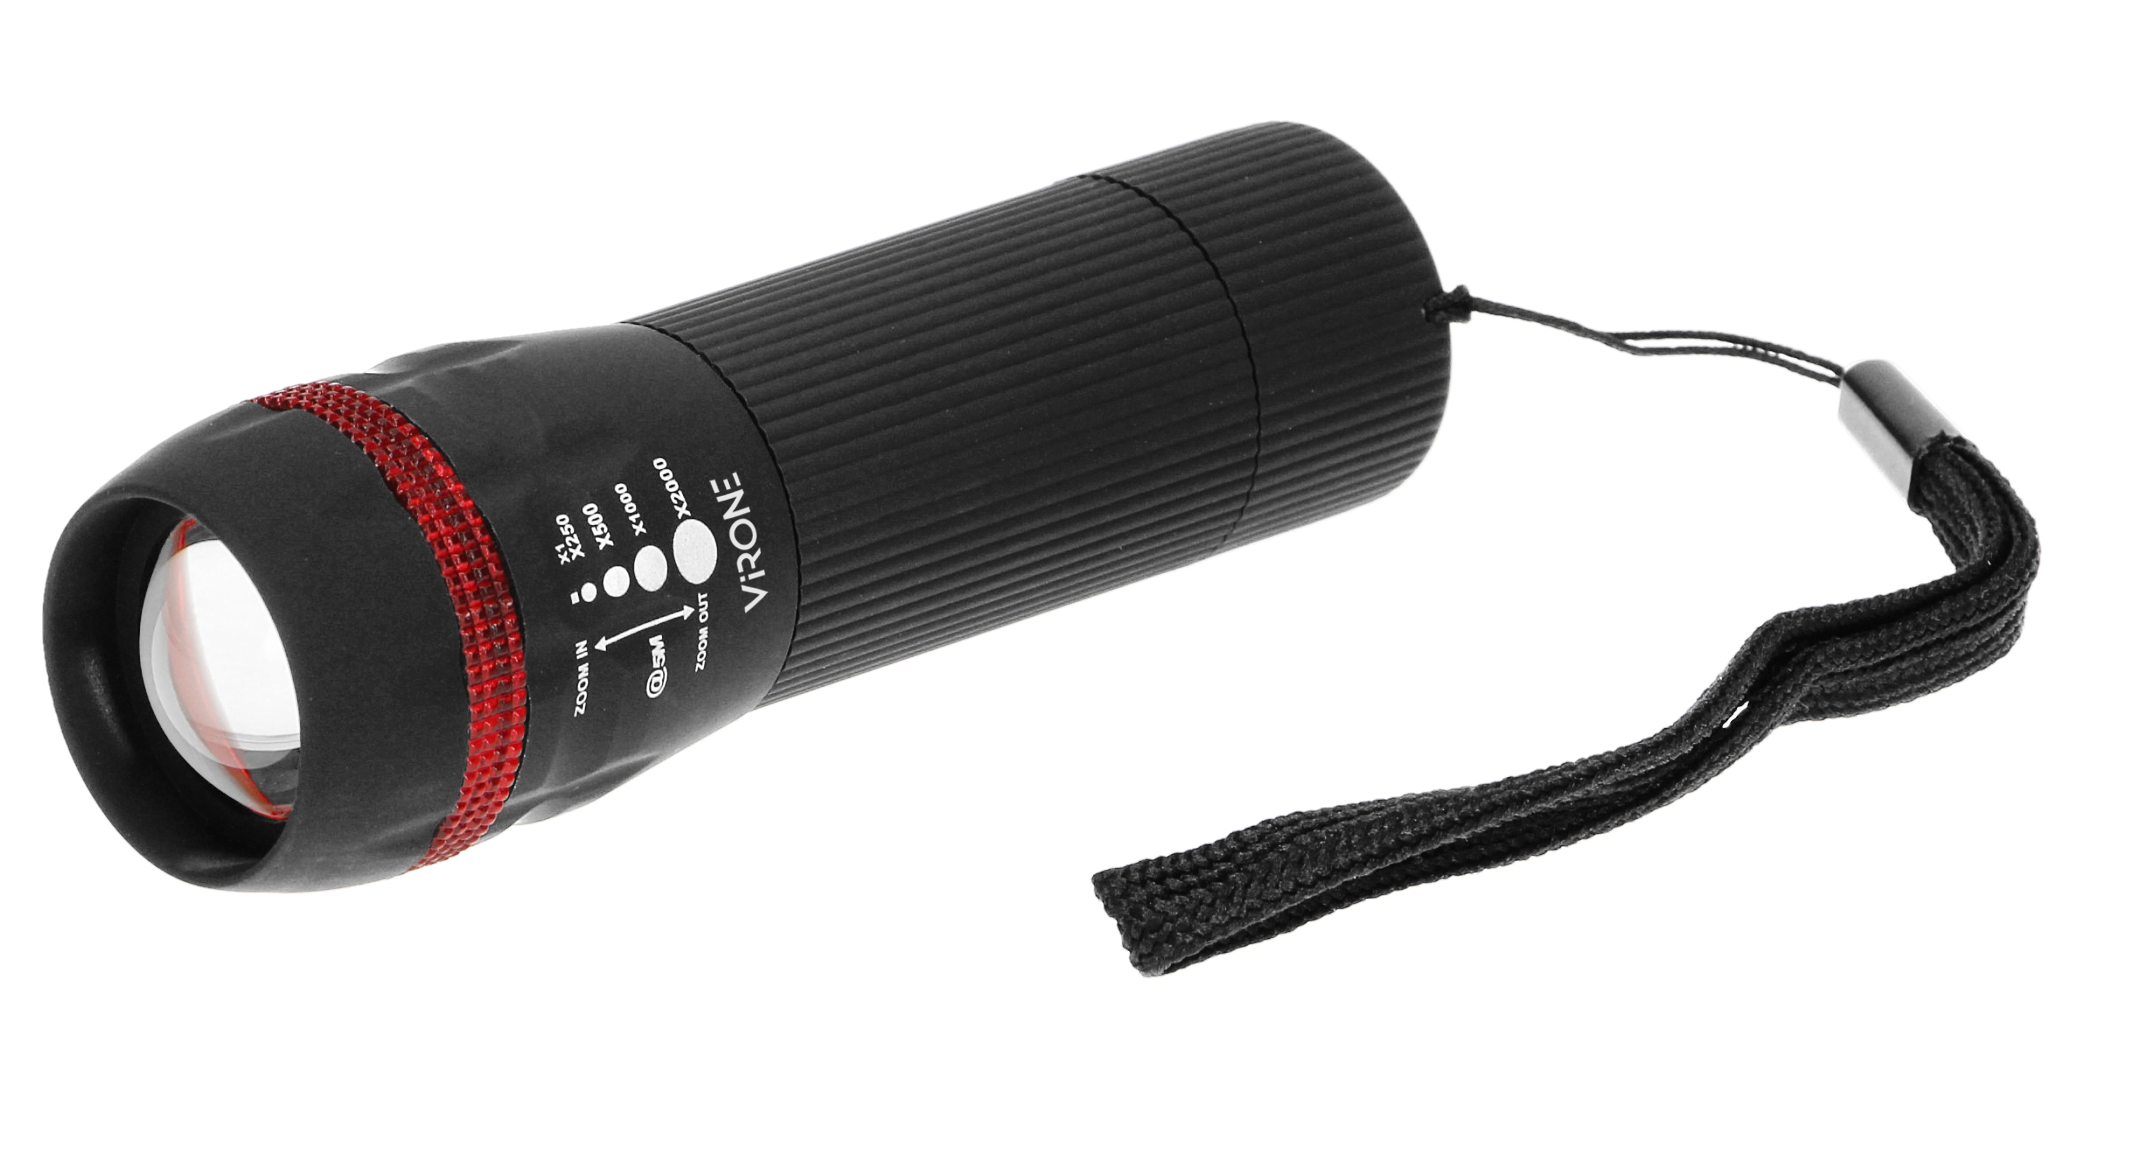 Lanterna LED ORNO VIRONE LT-4, 1W, 60lm, zoom, negru